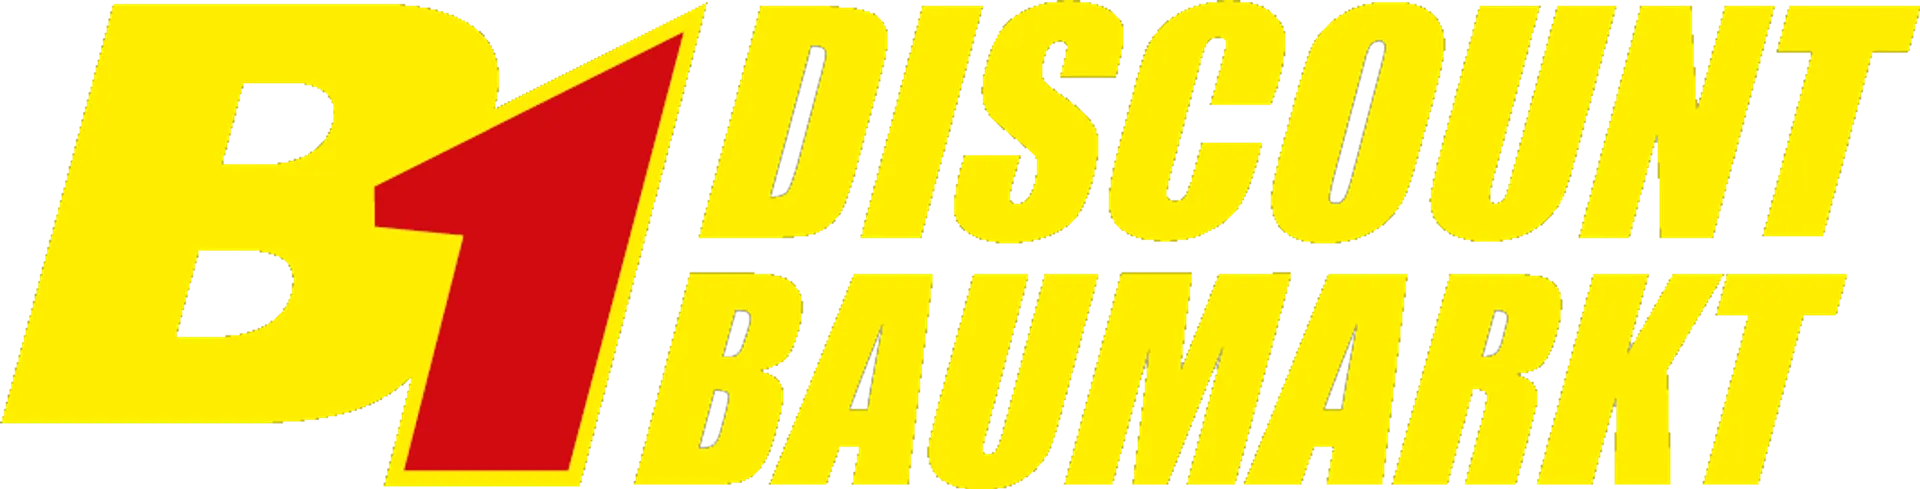 B1 DISCOUNT BAUMARKT logo